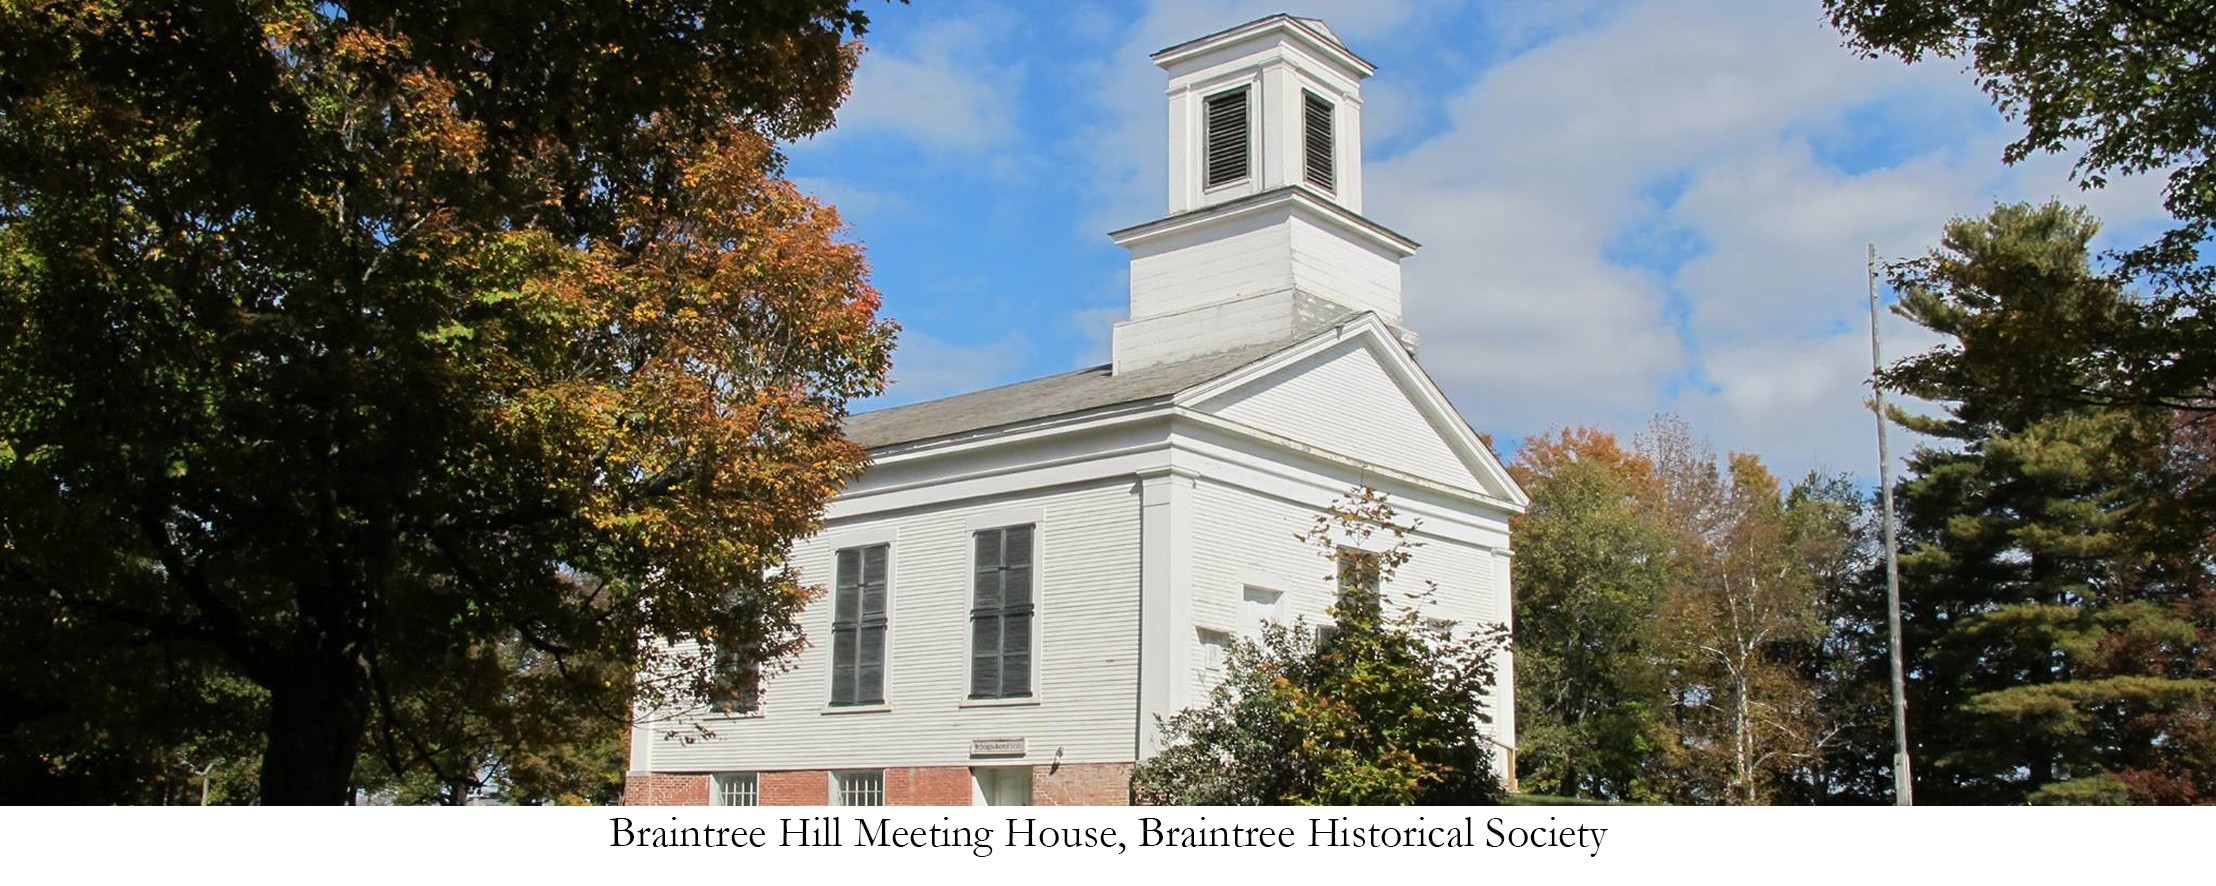 Braintree Hill Meeting House, Braintree Historical Society